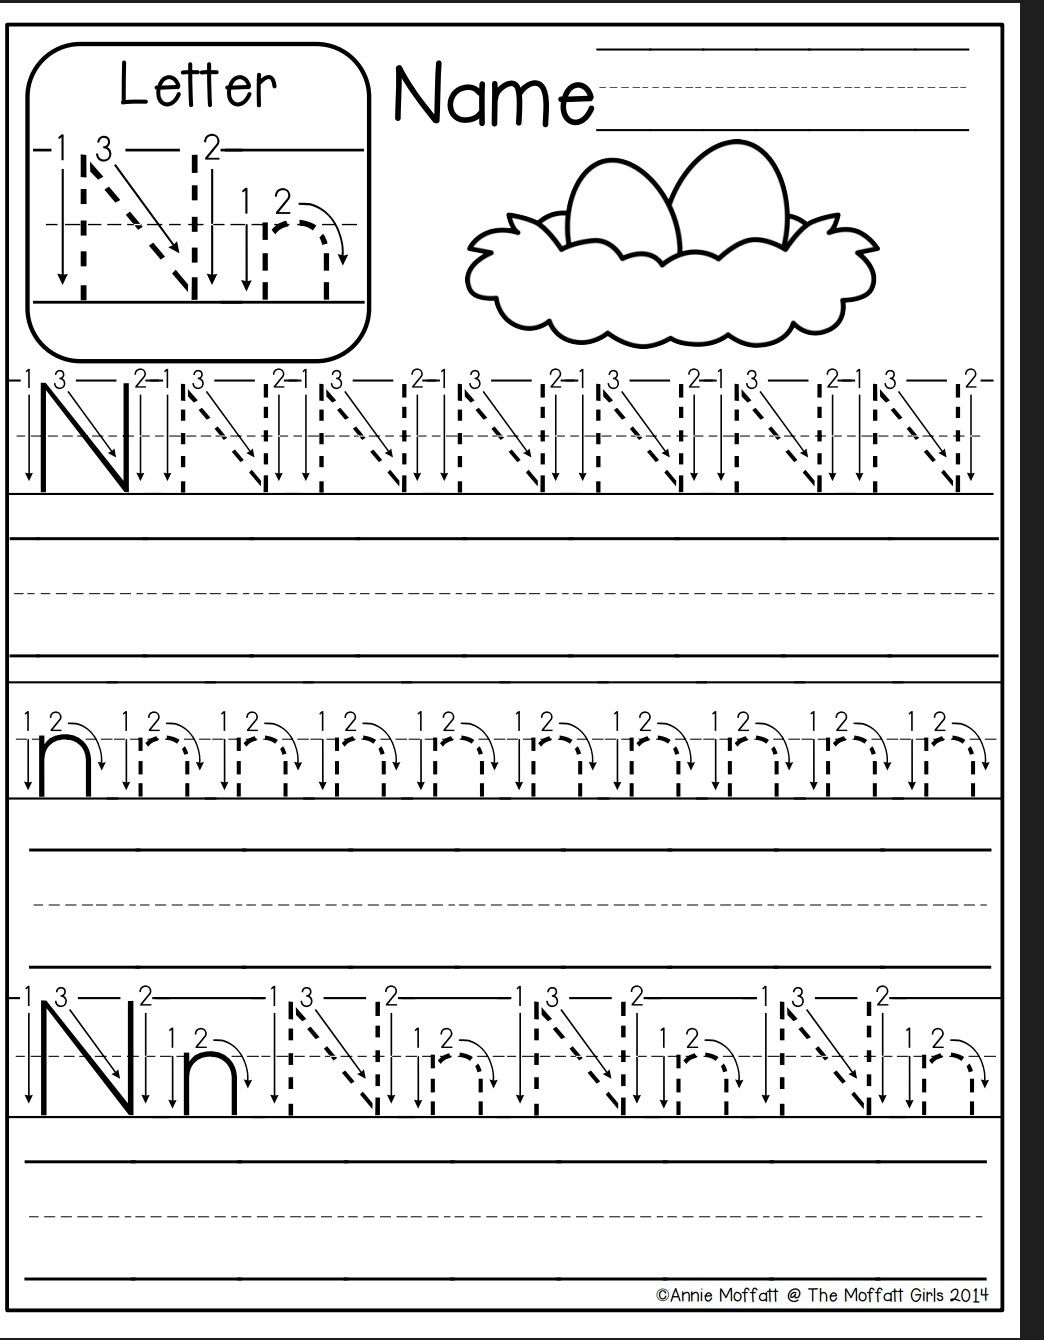 Letter N Worksheet | Letter N Worksheet inside Letter N Tracing Worksheets Preschool